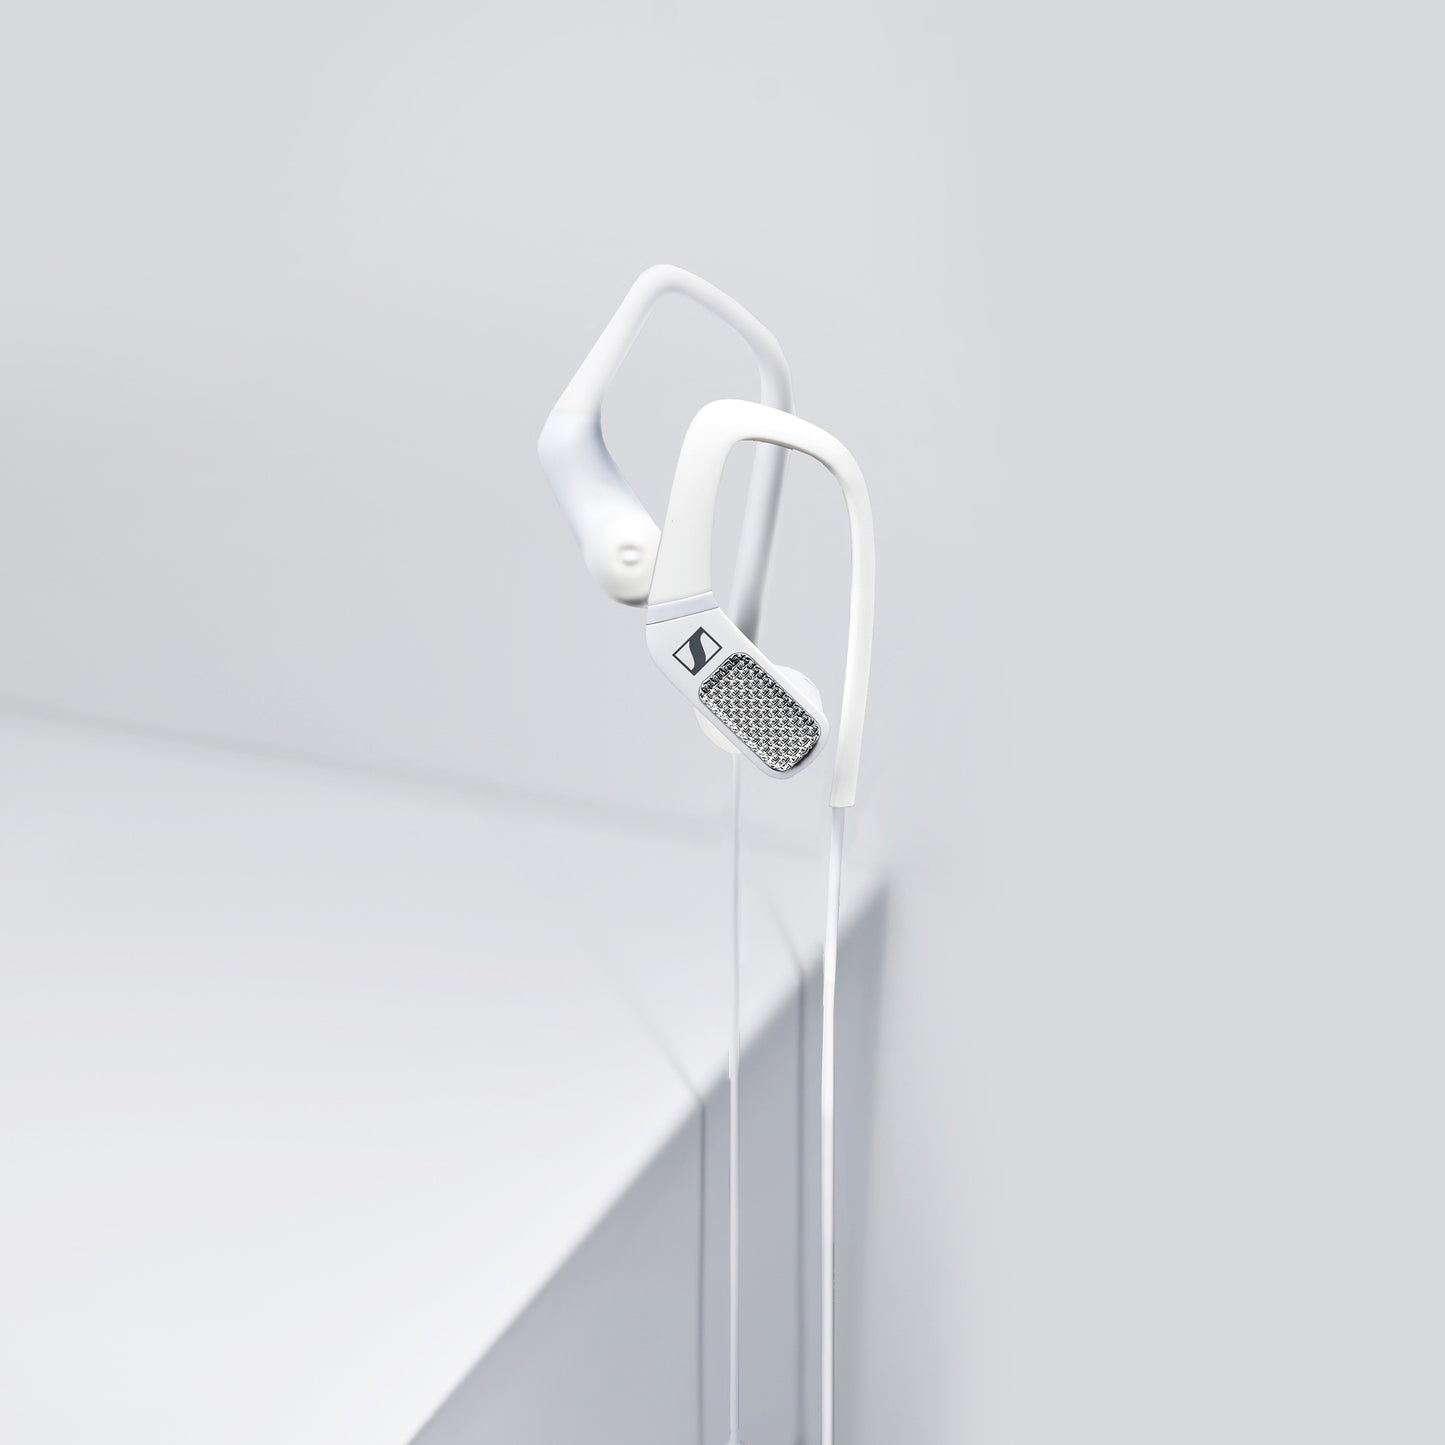 SENNHEISER Ambeo Smart Headset Binaural Recording In-Ear Earphones - White